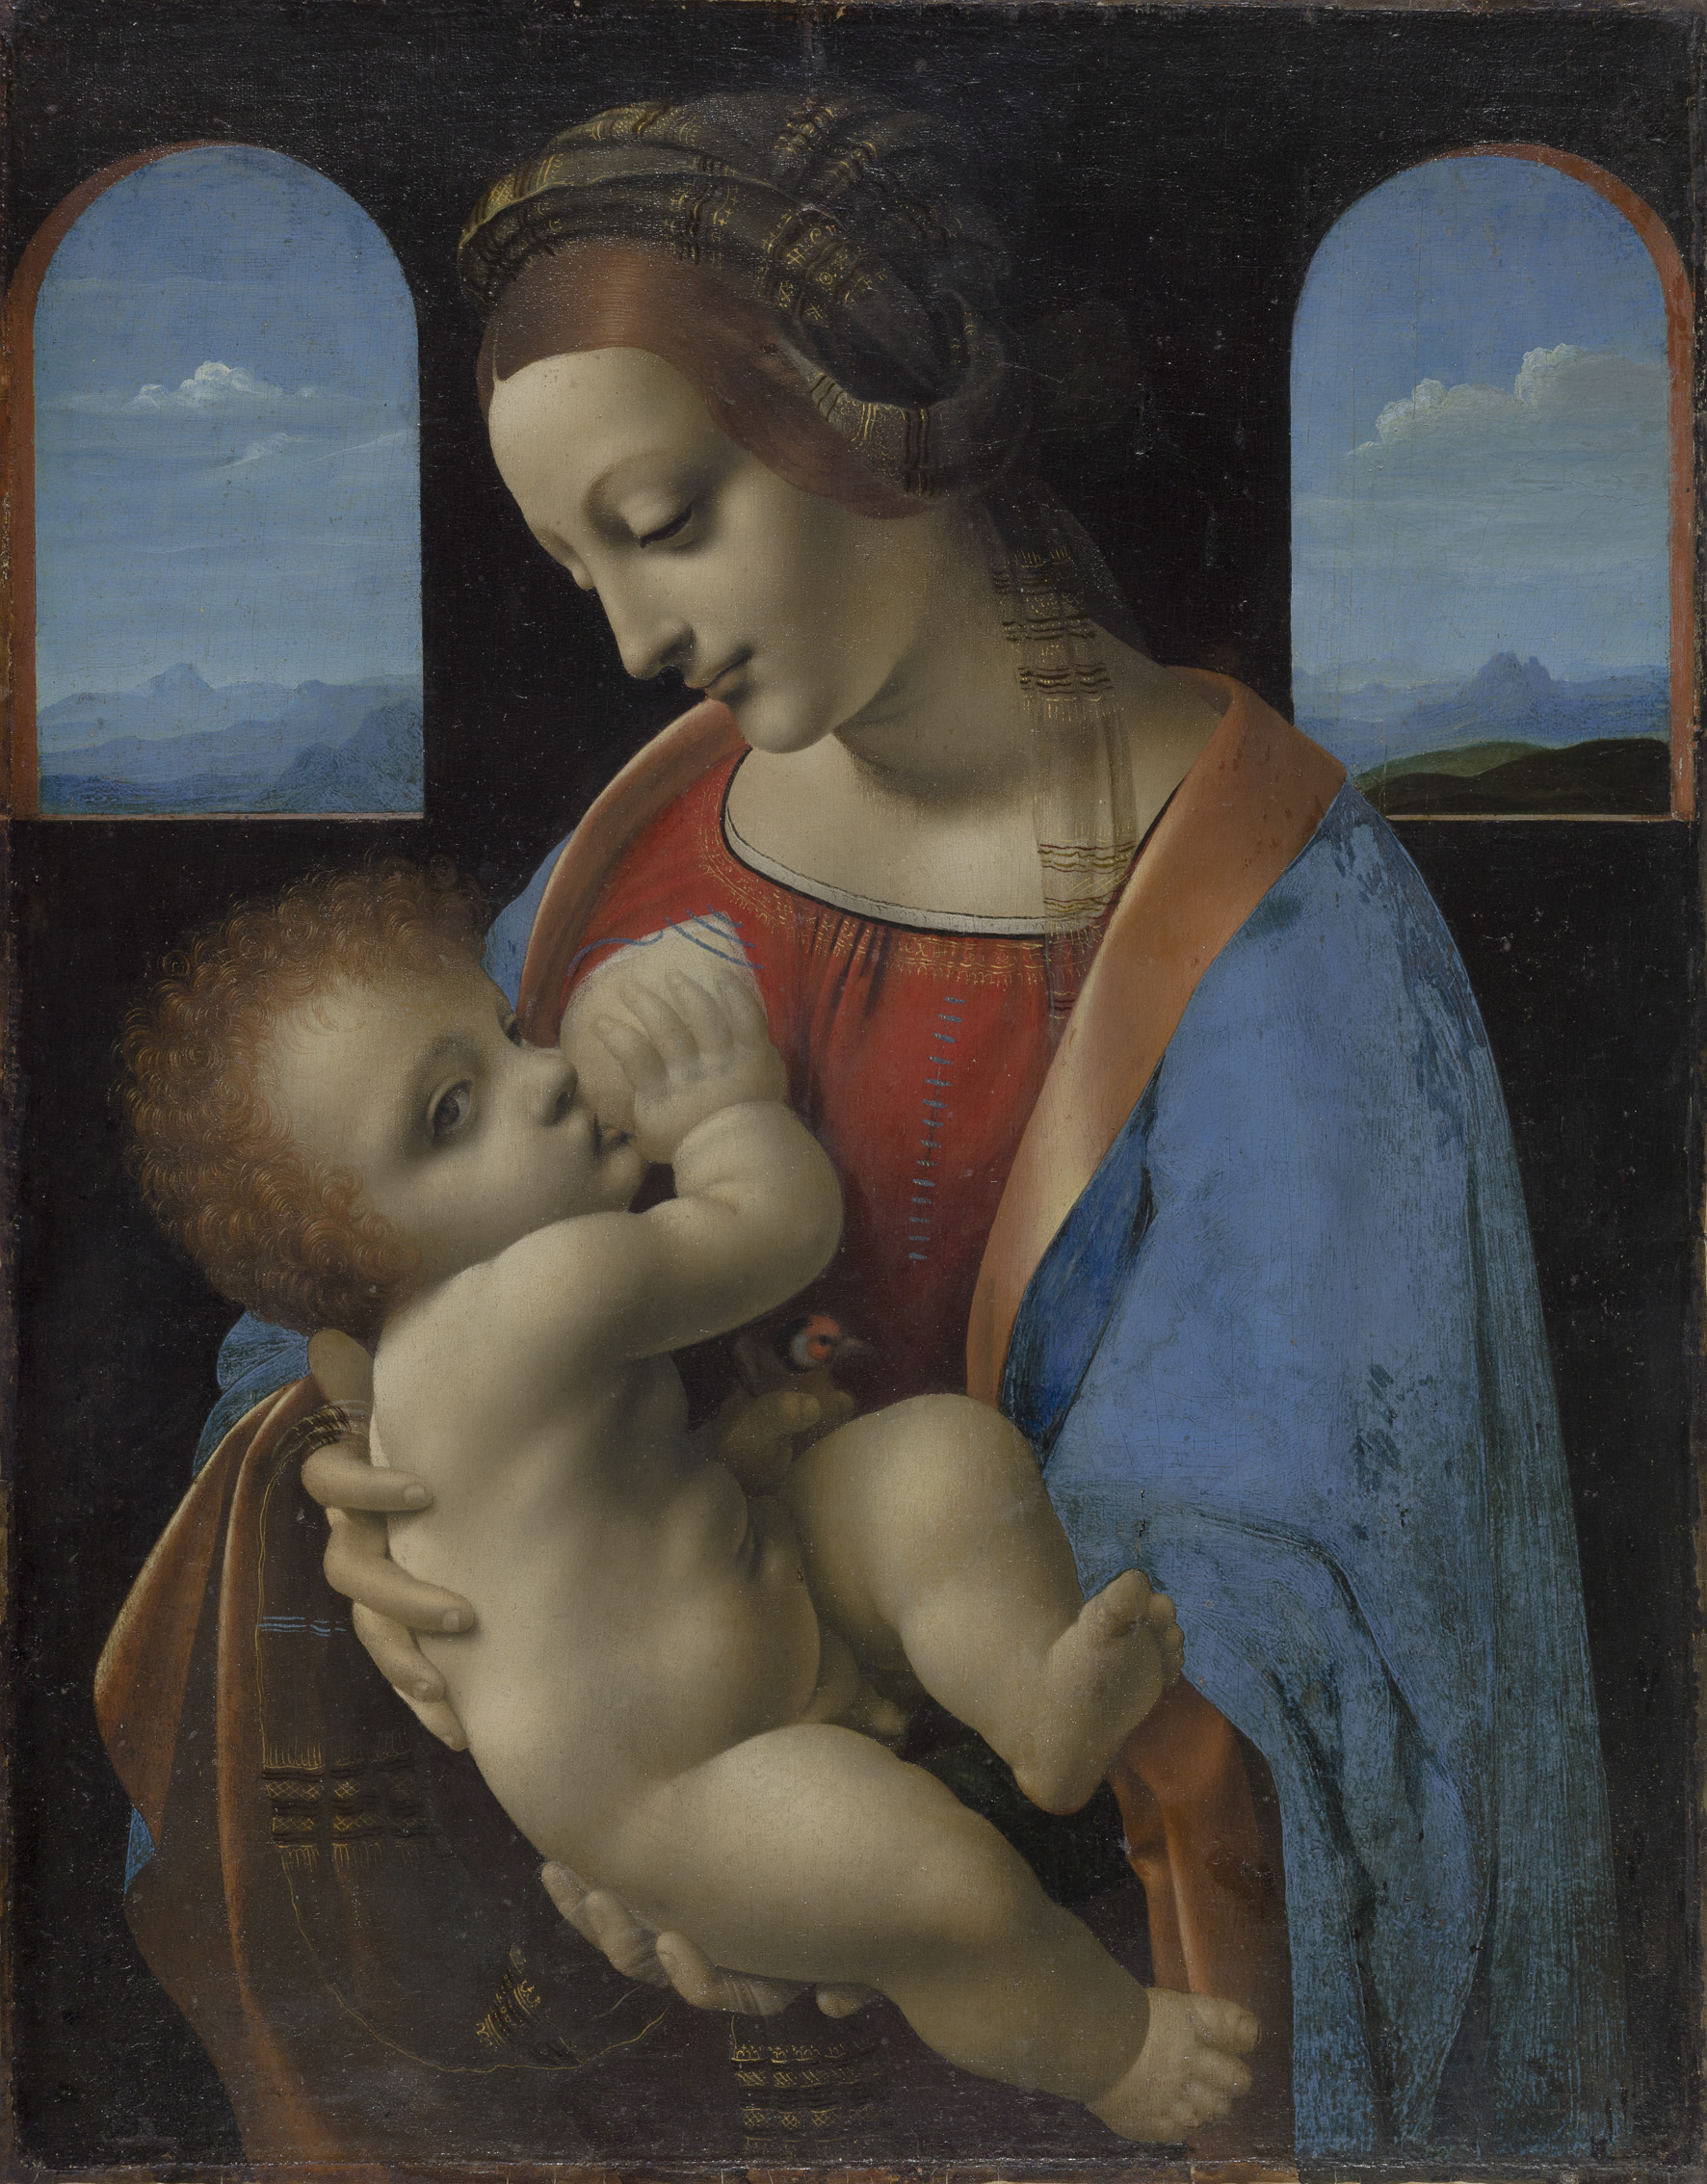 Madonna Litta by Leonardo da Vinci - c. 1490 